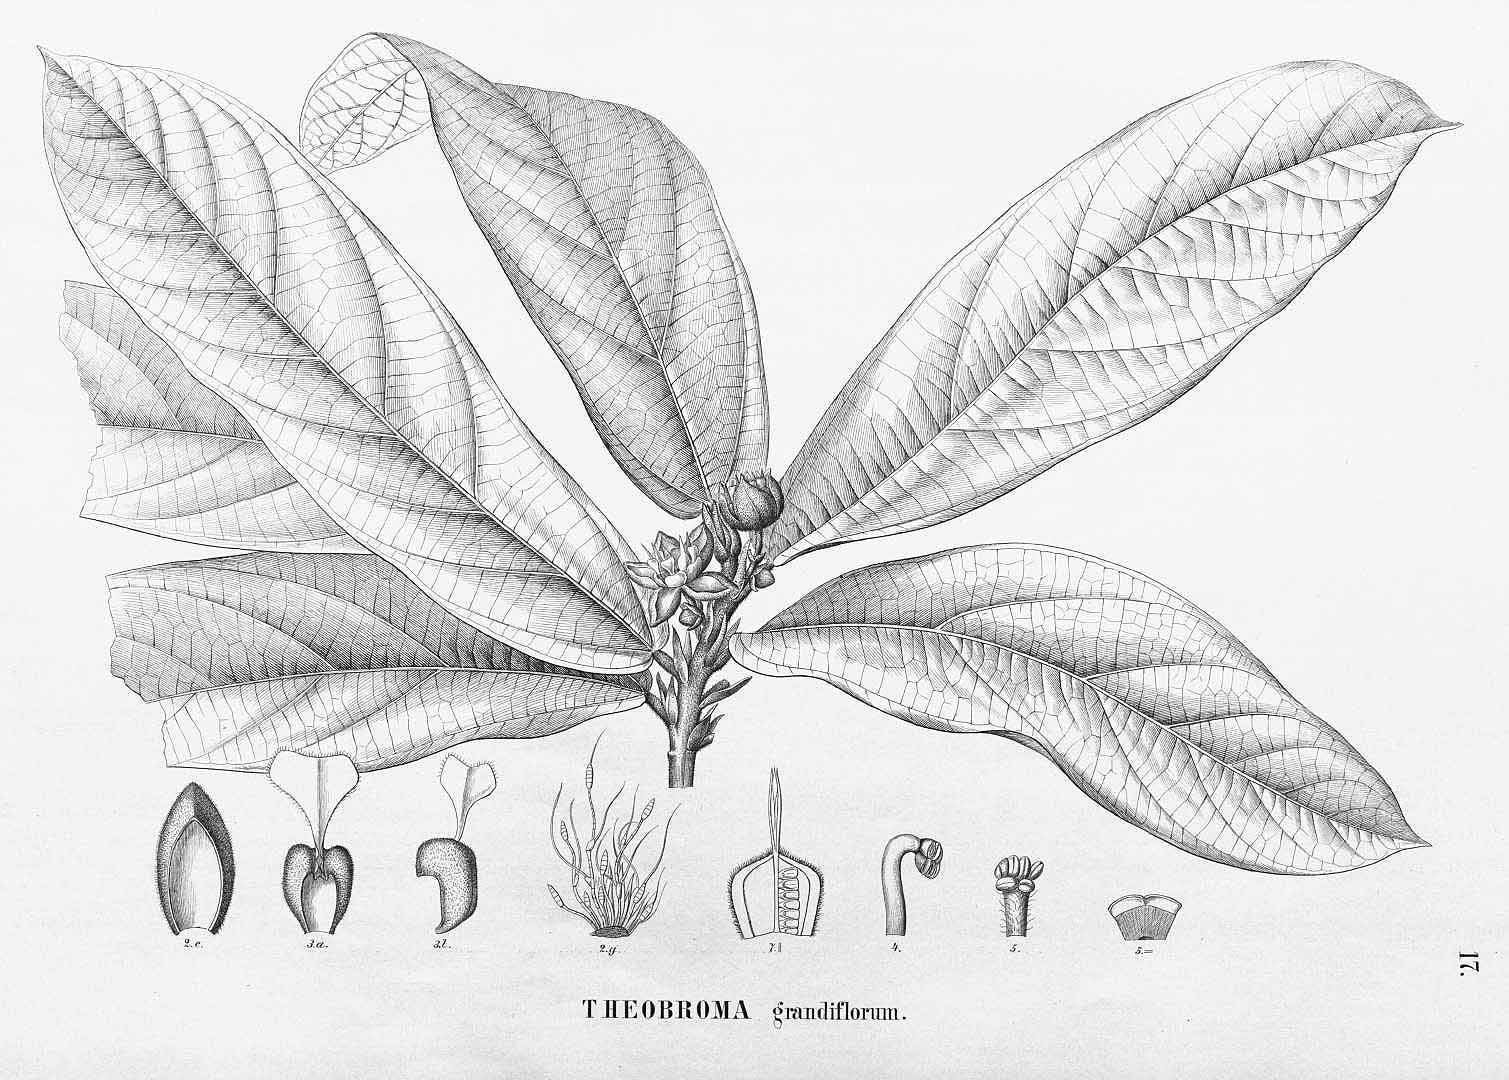 Illustration Theobroma grandiflorum, Par Martius, C.F.P. von, Eichler, A.G., Urban, I., Flora Brasiliensis (1840-1906) Fl. Bras. vol. 12(3): (1886-1892), via plantillustrations 